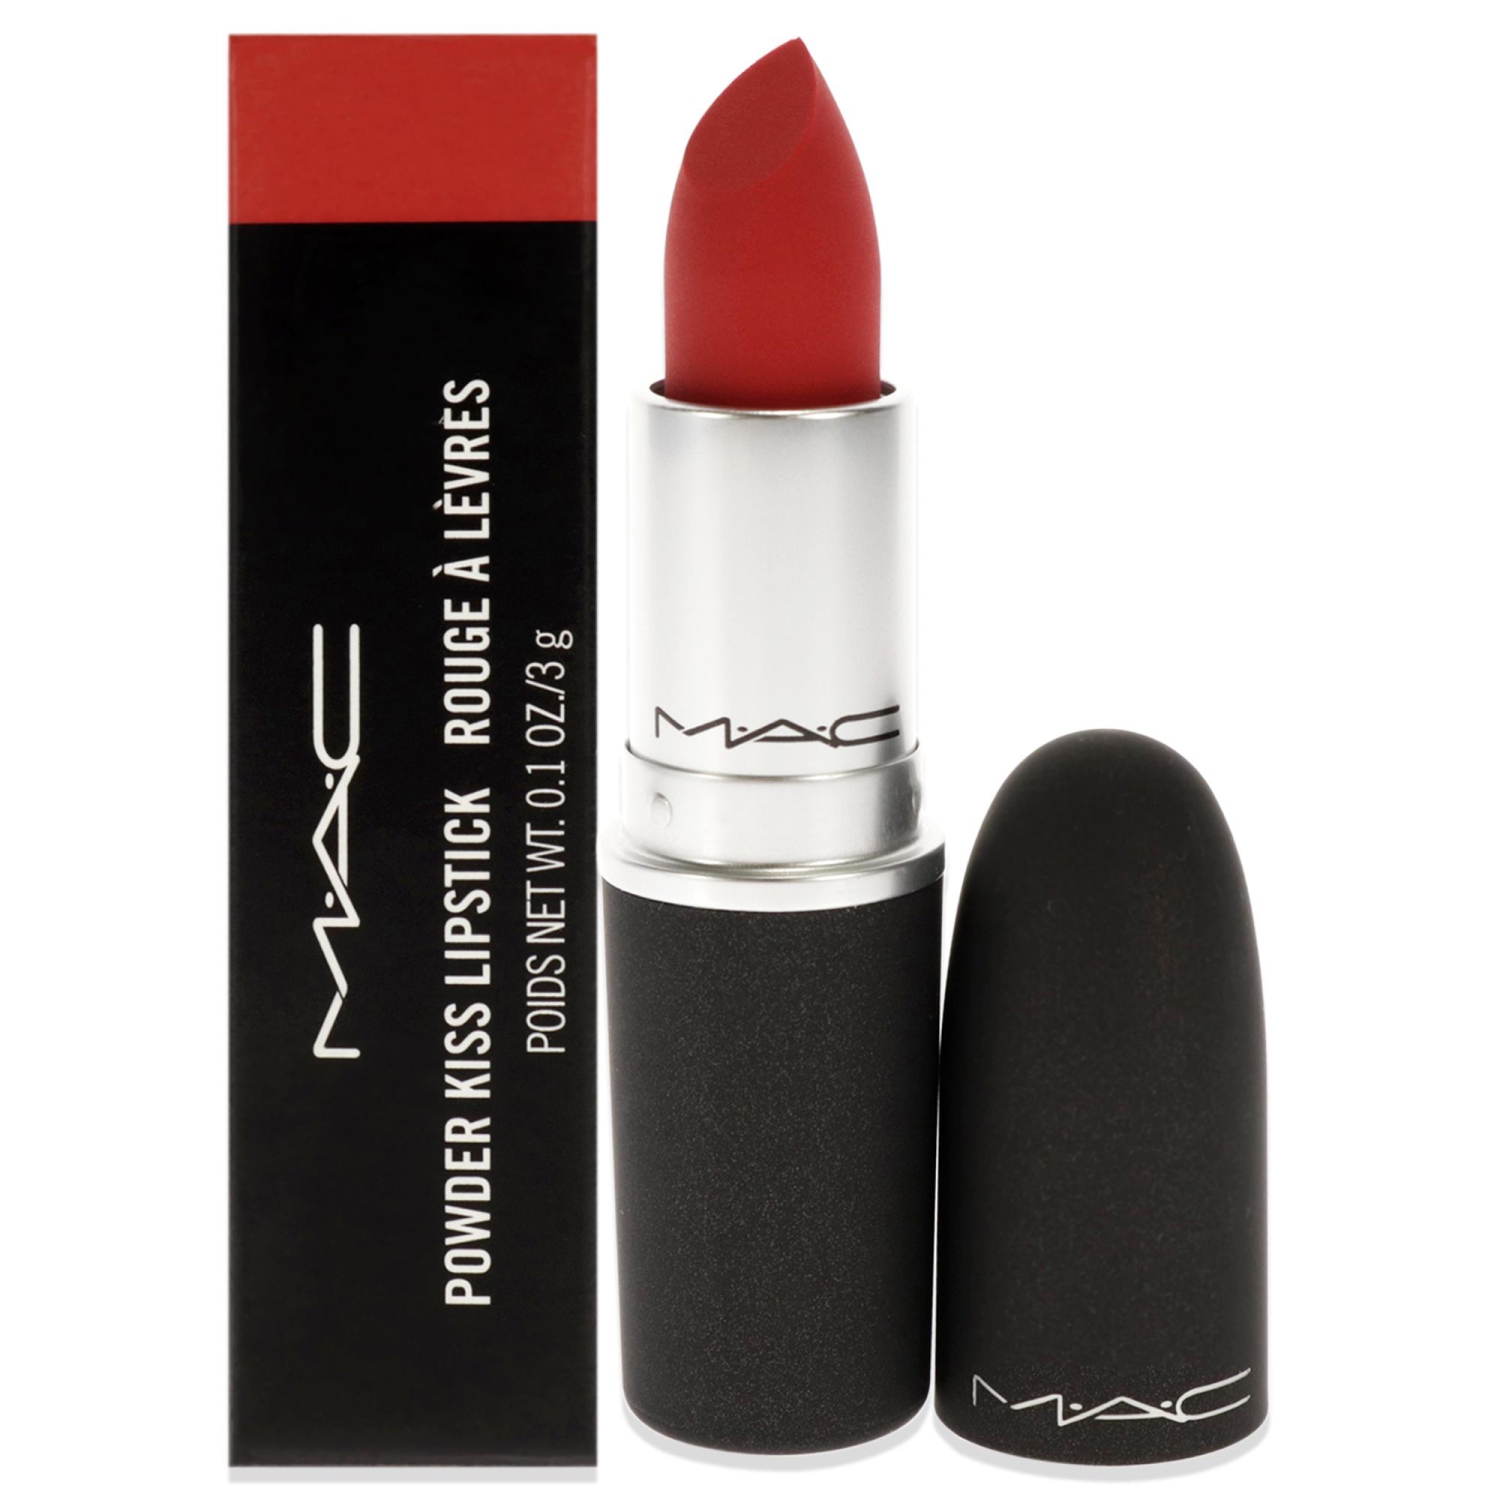 Powder Kiss Lipstick - Lasting Passion by MAC for Women - 0.1 oz Lipstick